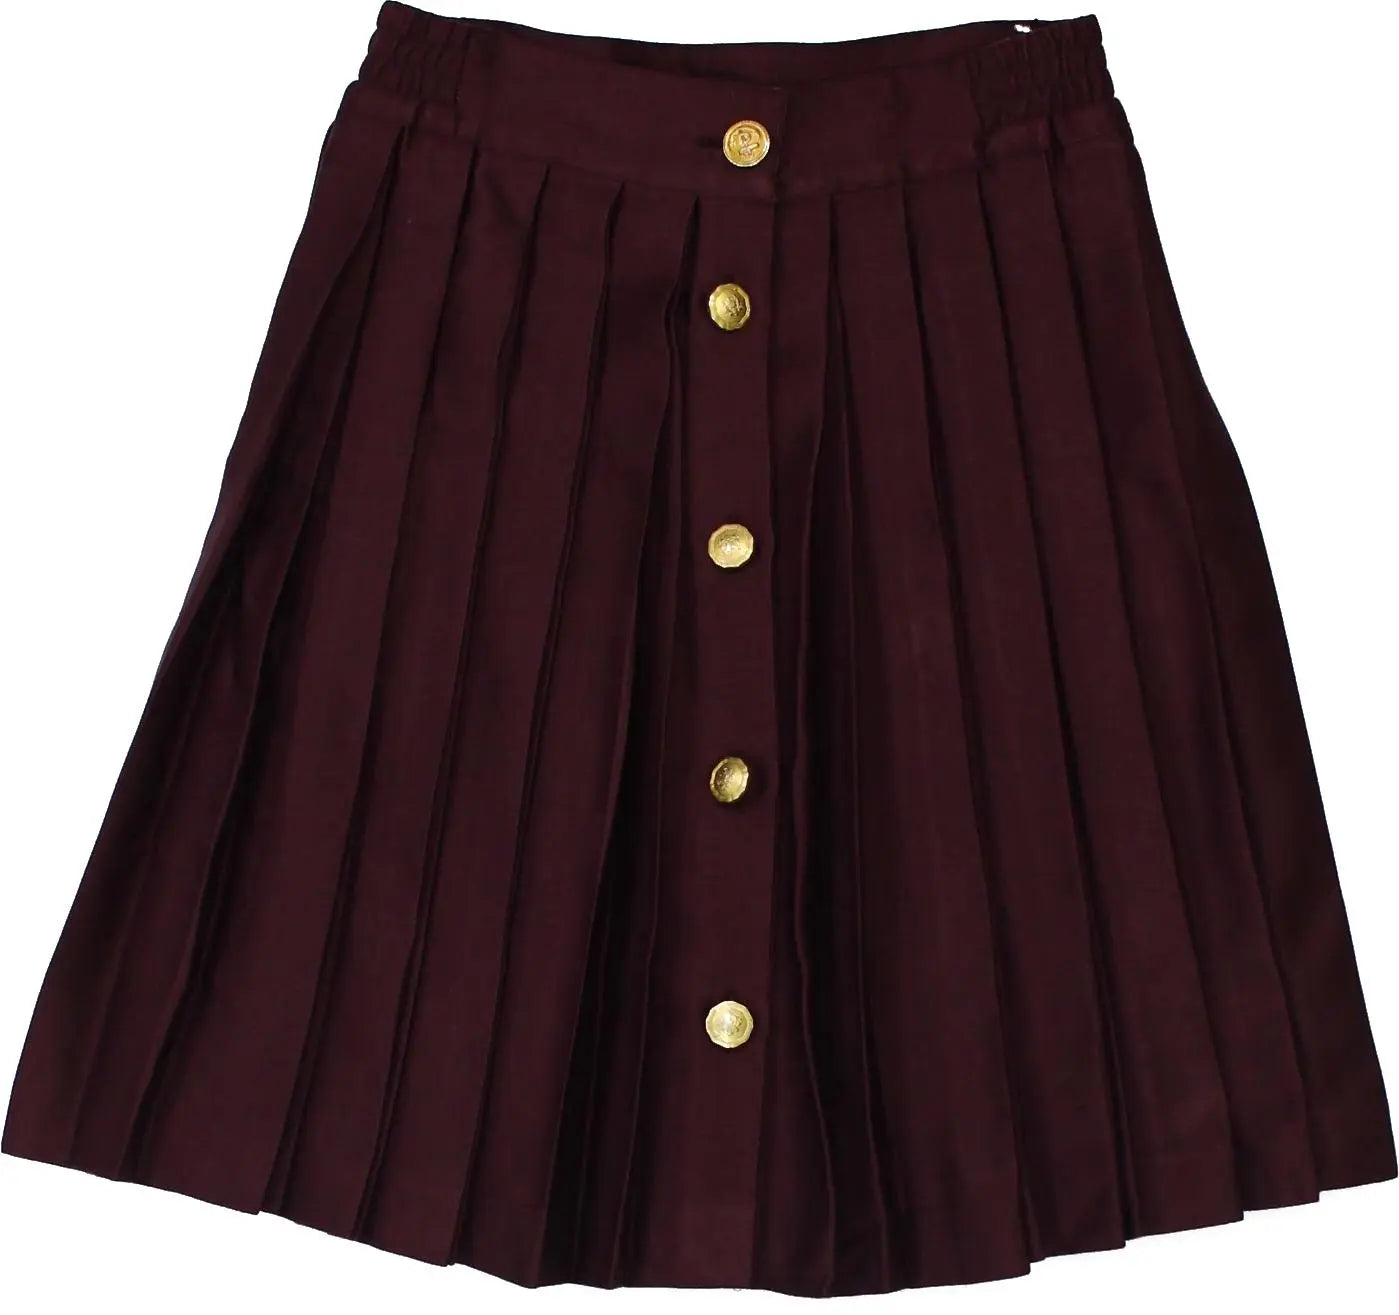 PJ Group - Burgundy Skirt- ThriftTale.com - Vintage and second handclothing